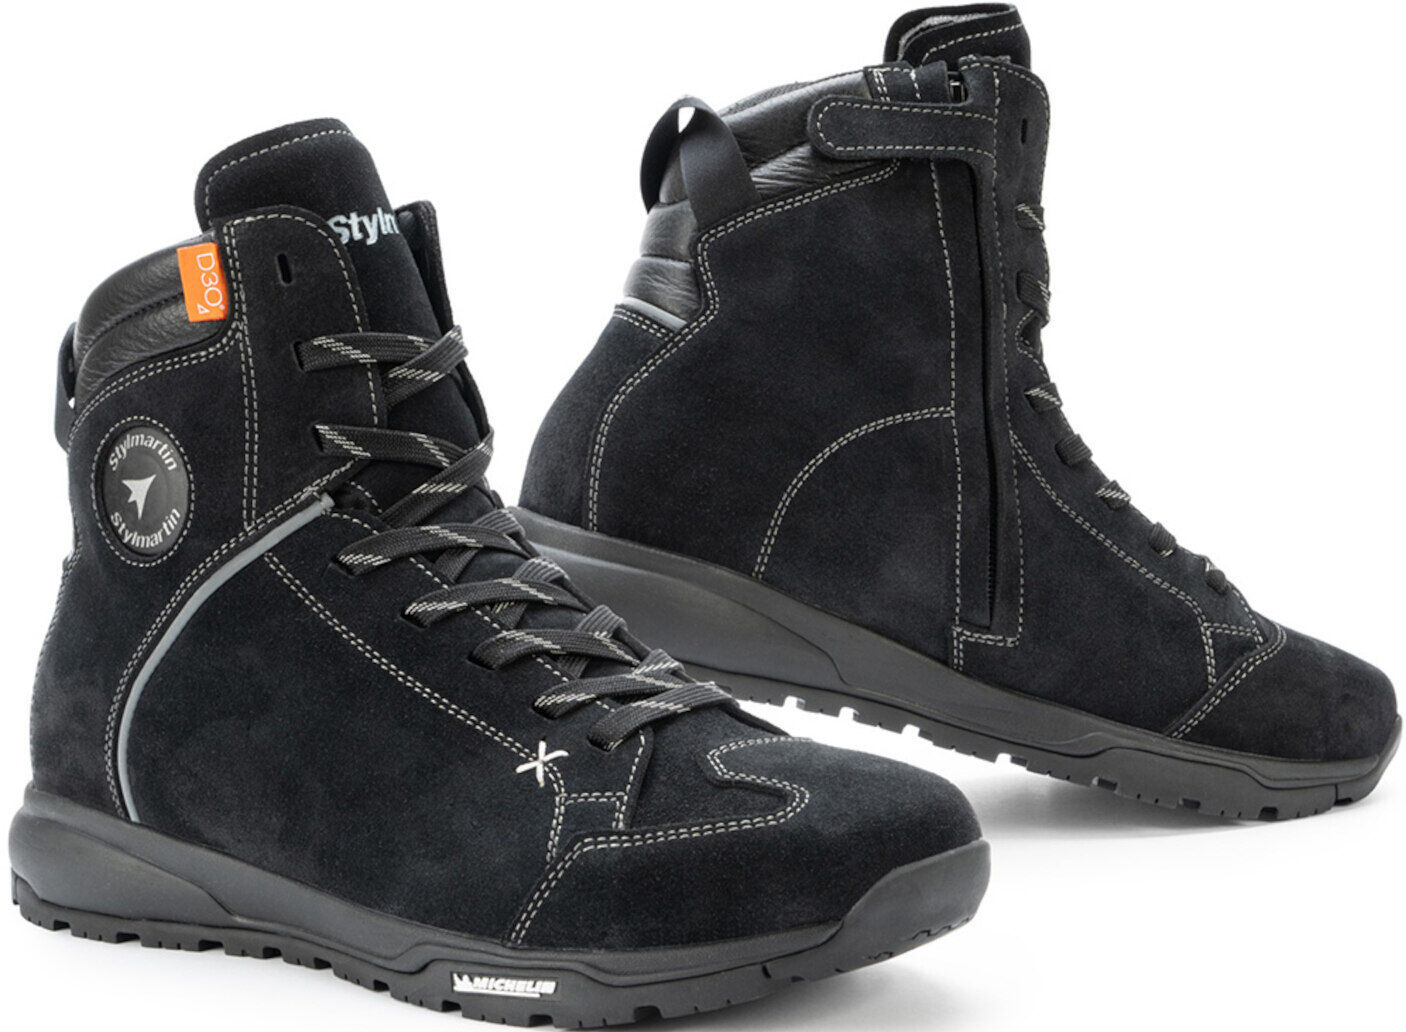 Stylmartin Zed Zapatos de moto impermeables - Negro (41)